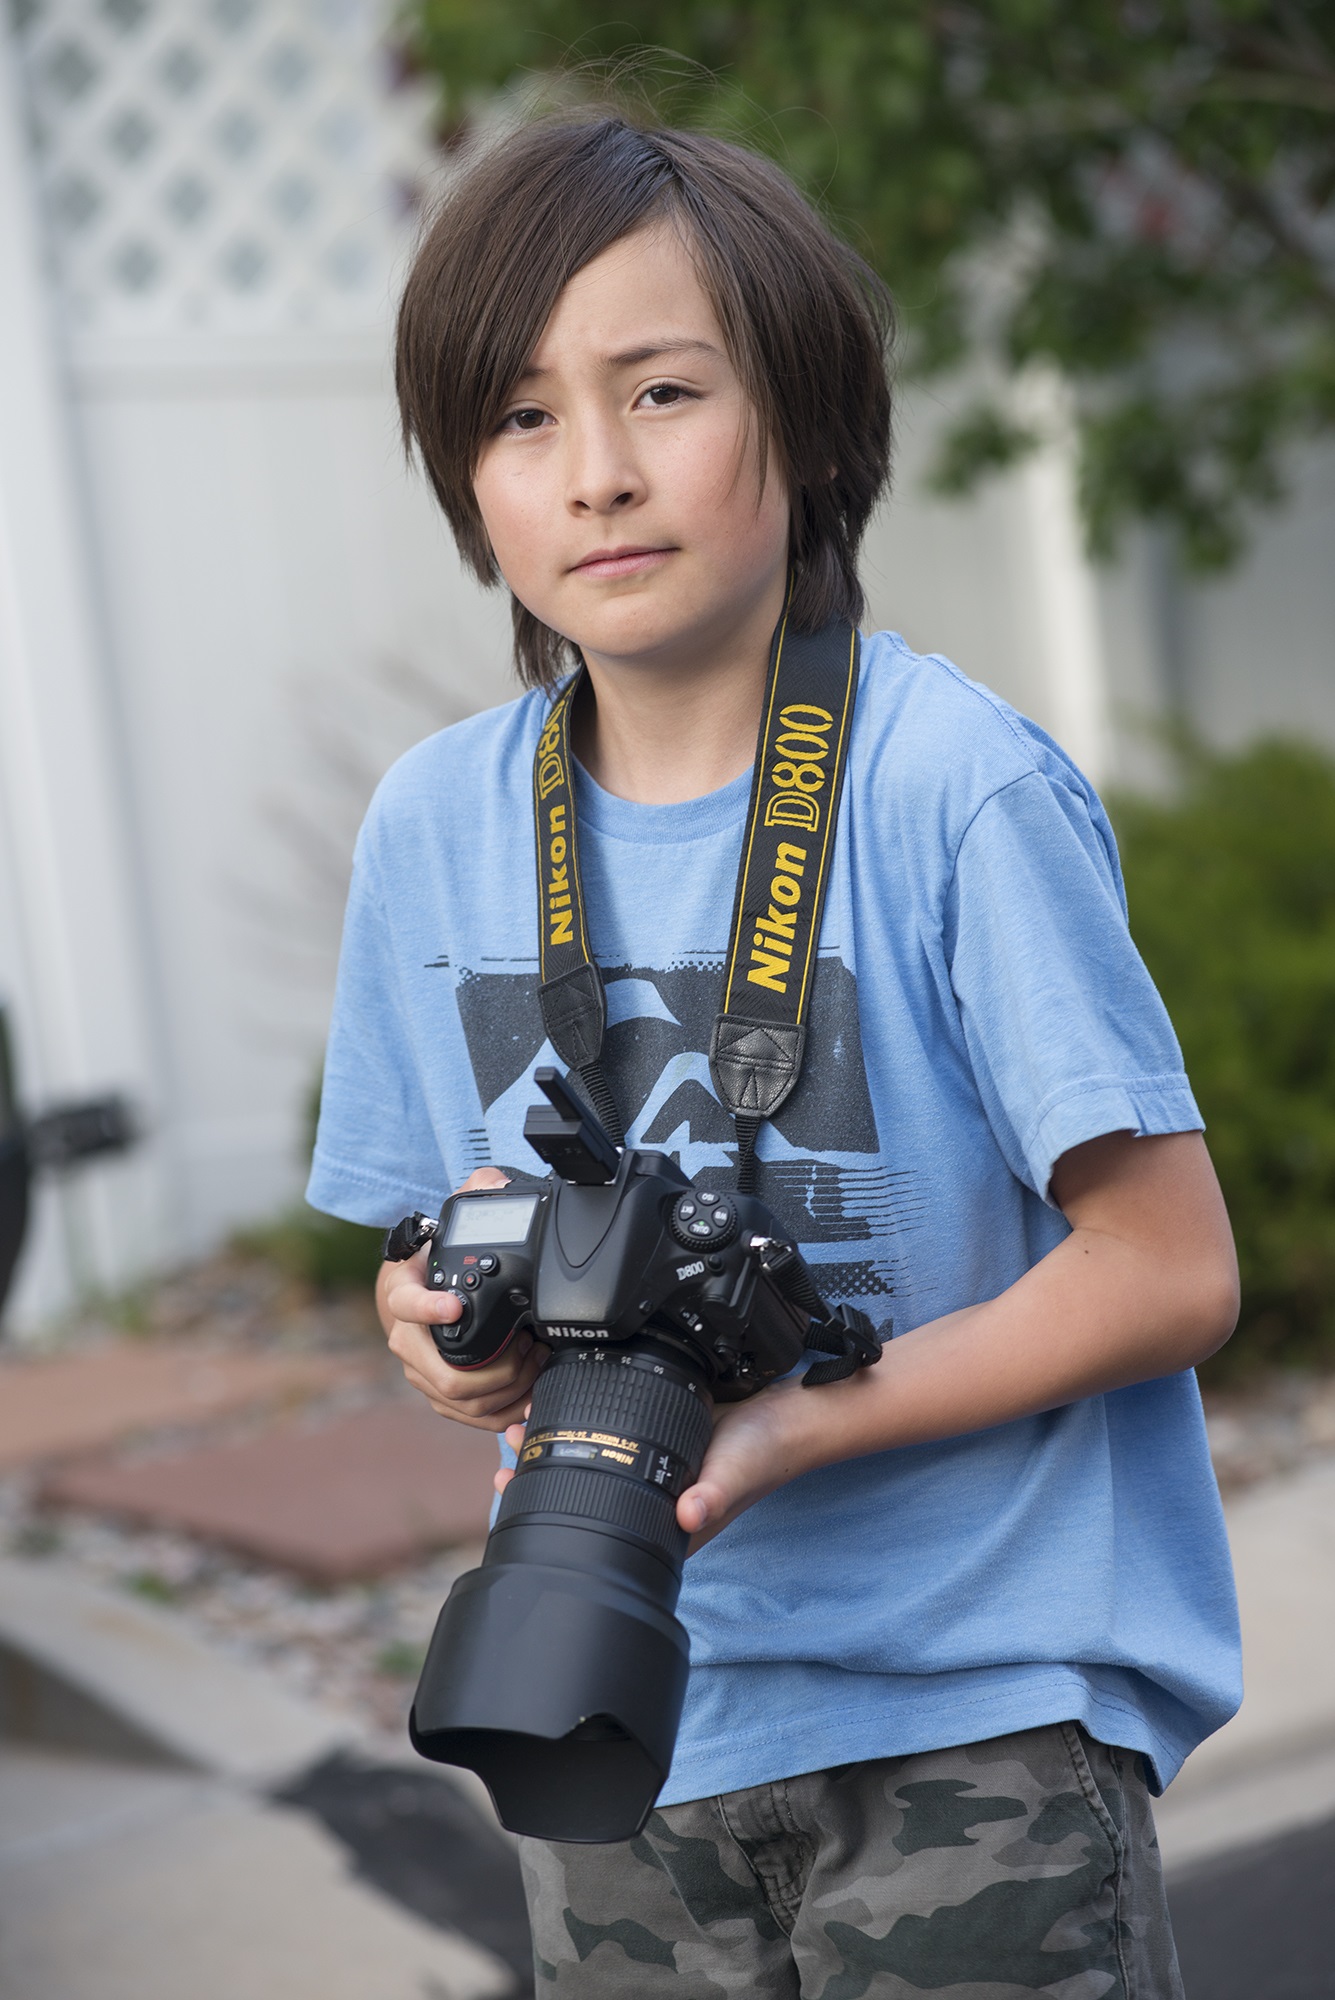 kid holding a Nikon D800 camera